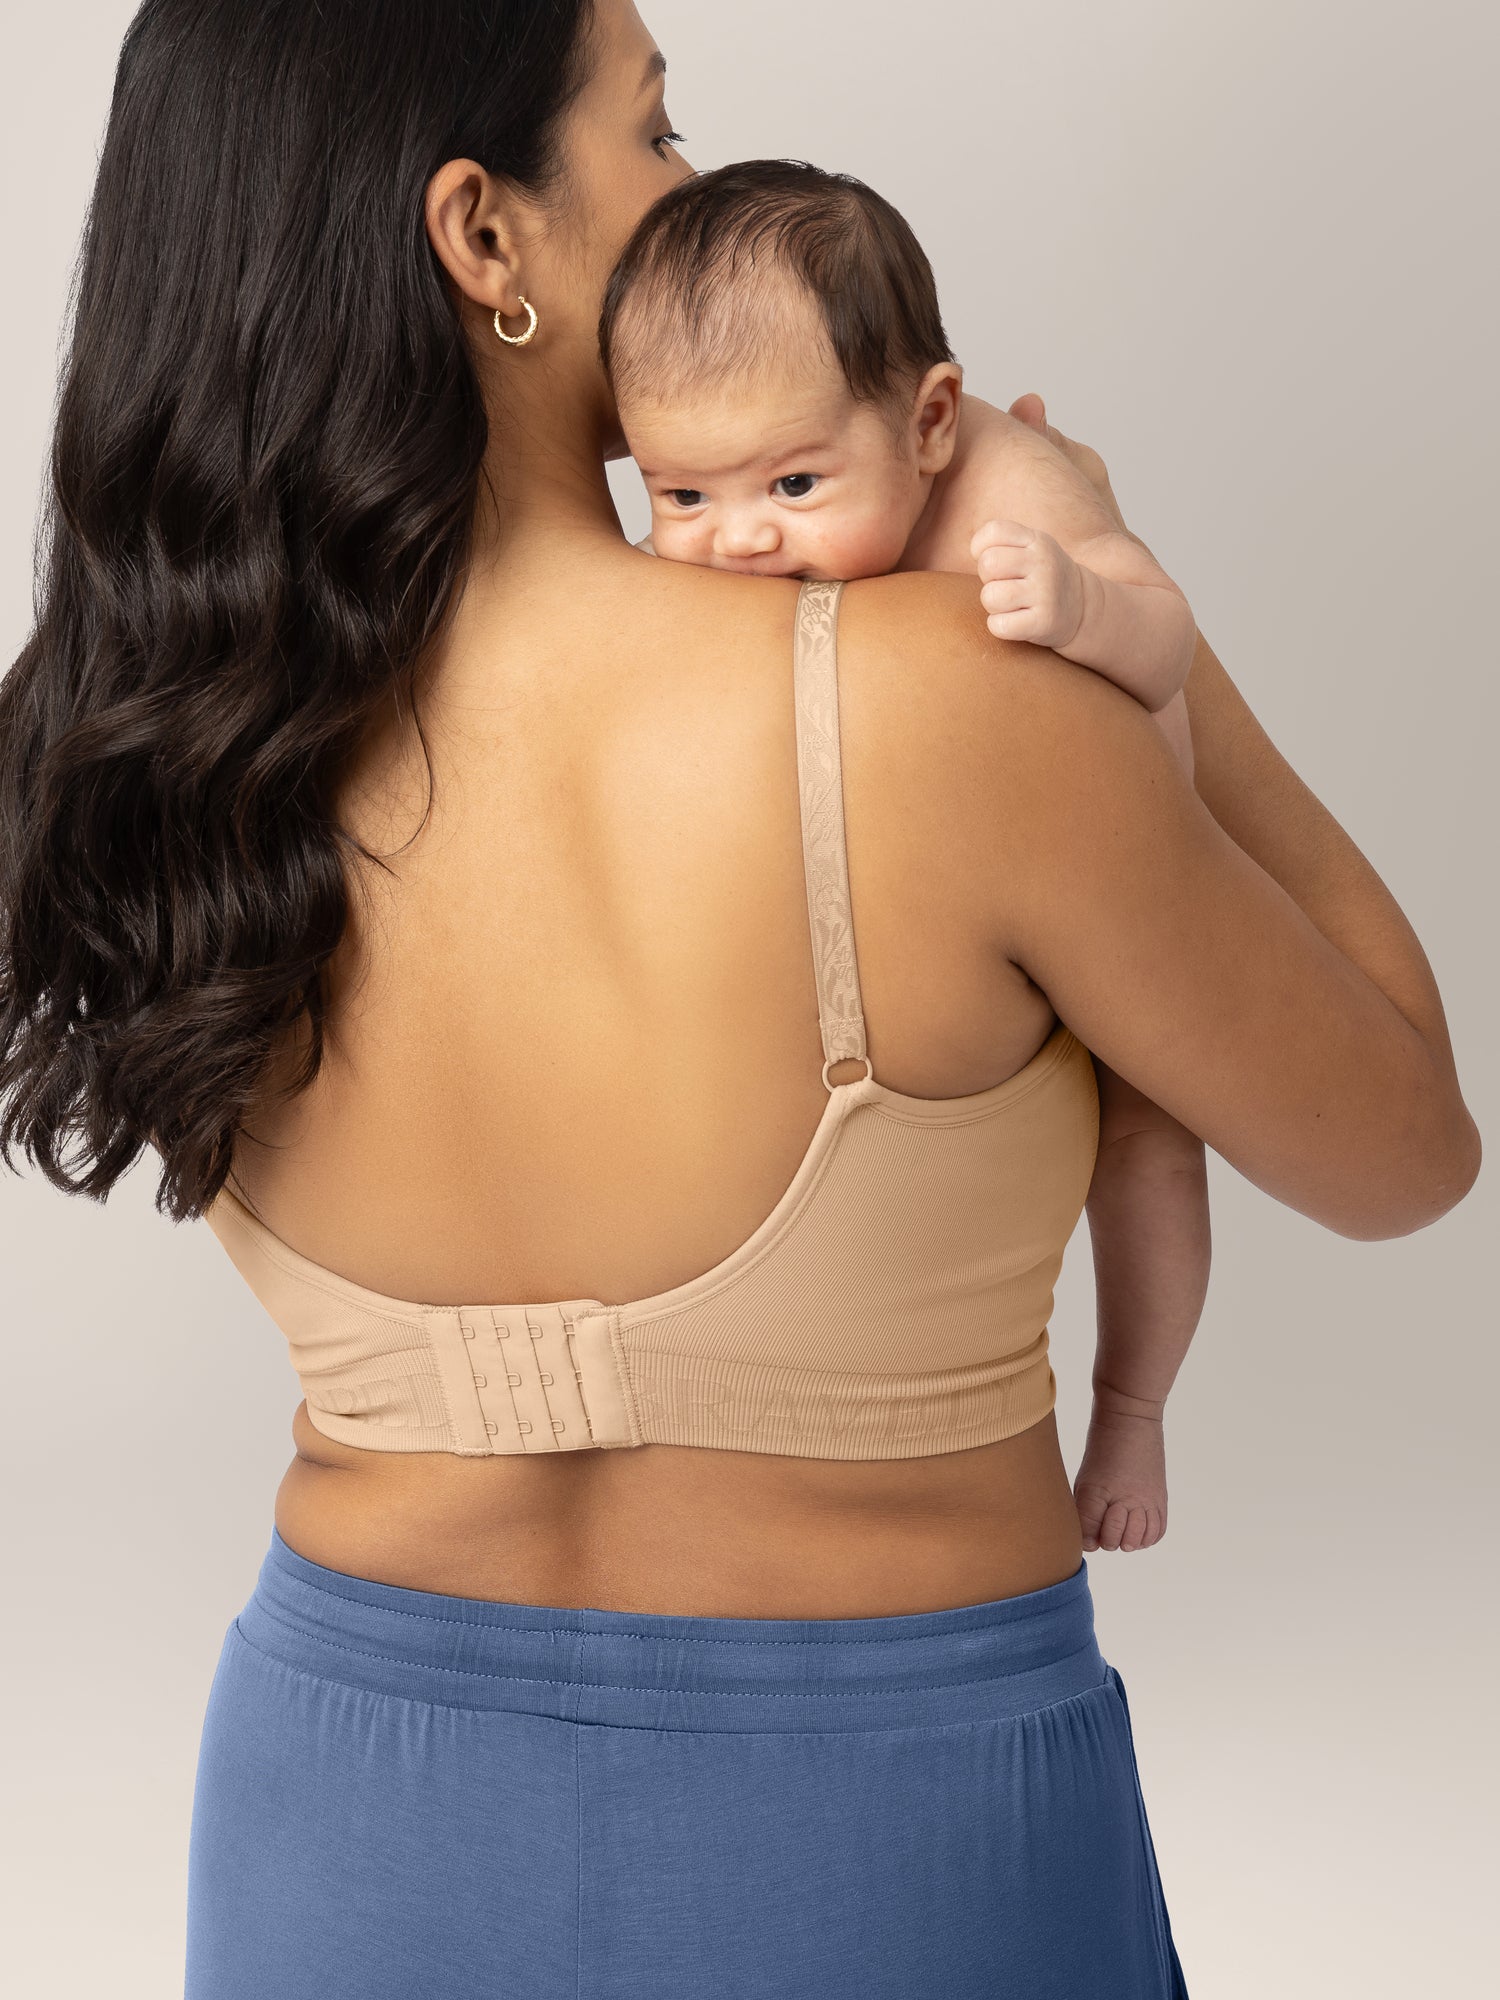 Hand Free Pumping Nursing Bra Breastfeeding Maternity Bras Women For Breast  Special Underwear Pregnancy Clothes Can